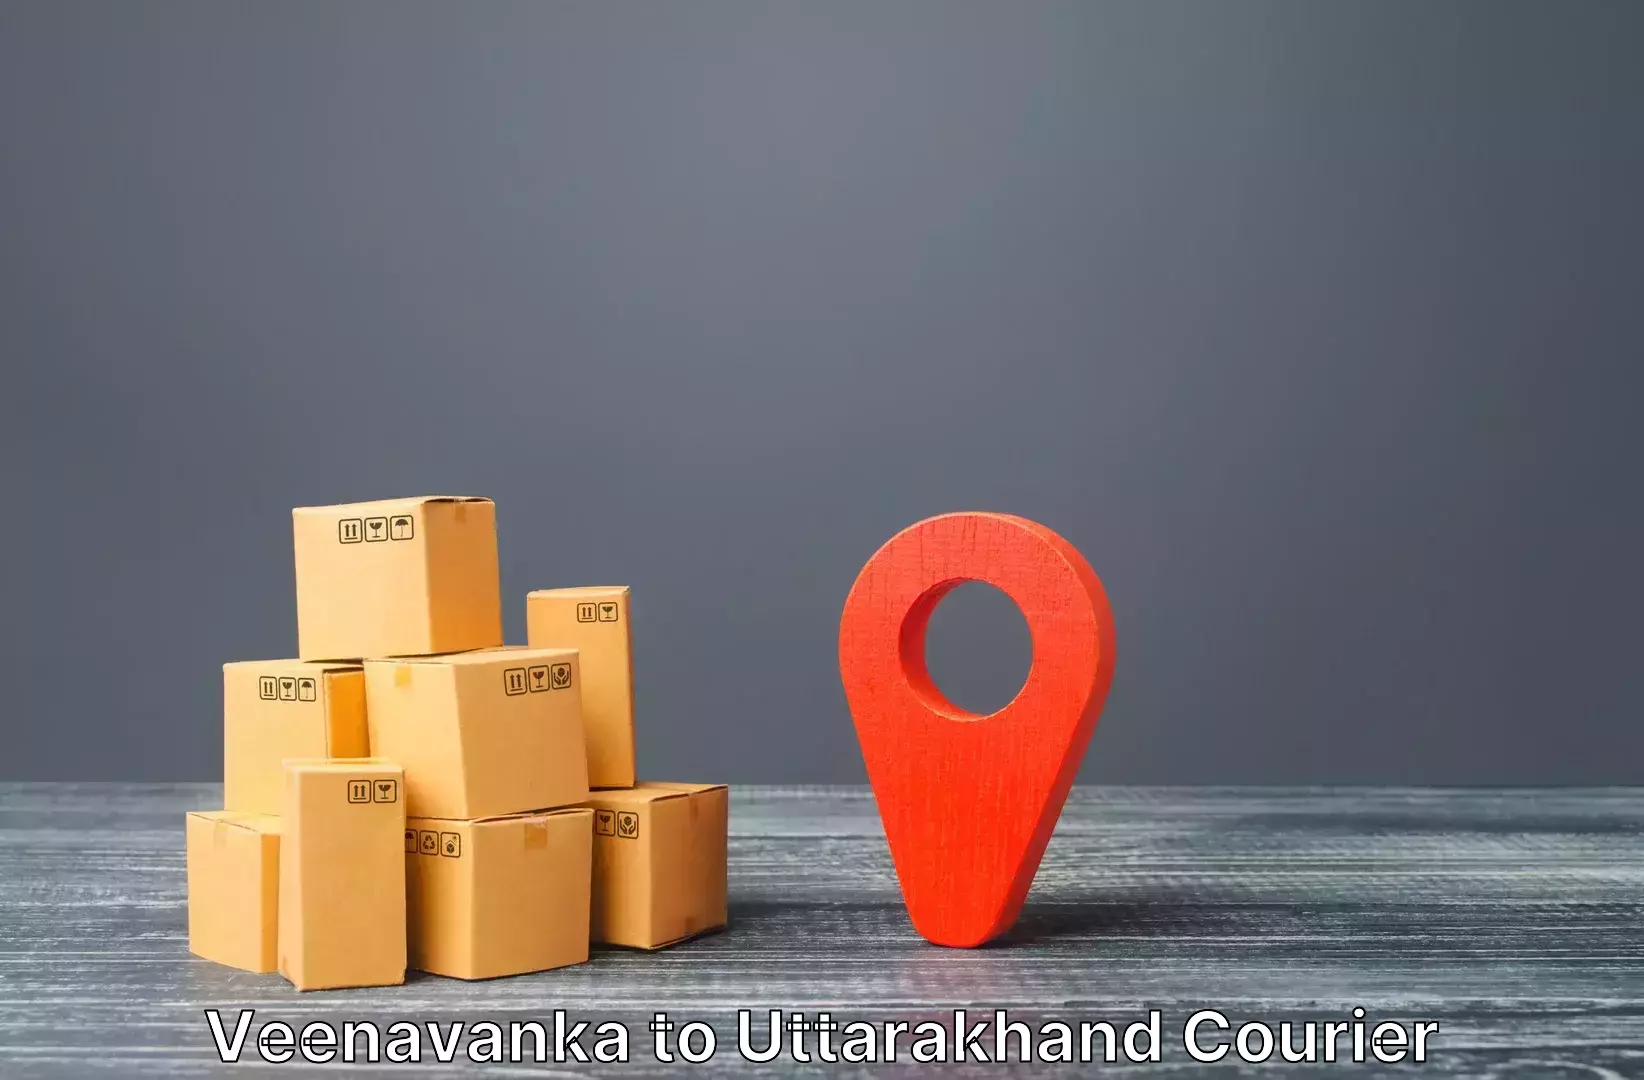 Luggage dispatch service Veenavanka to Lansdowne